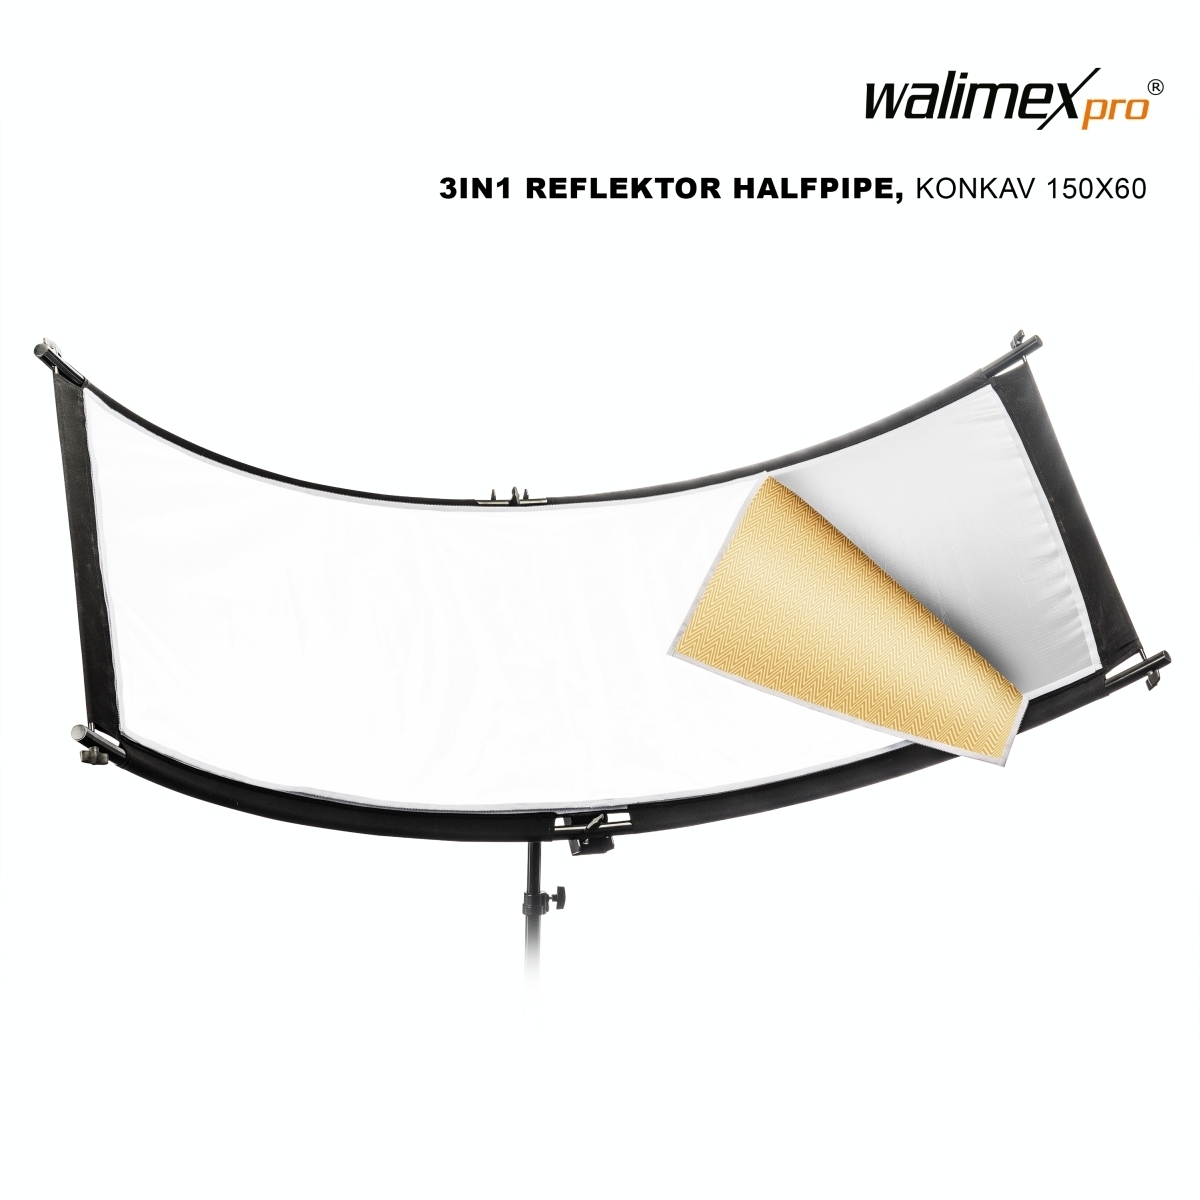 Walimex pro 3in1 Reflector Halfpipe, hol 150x60